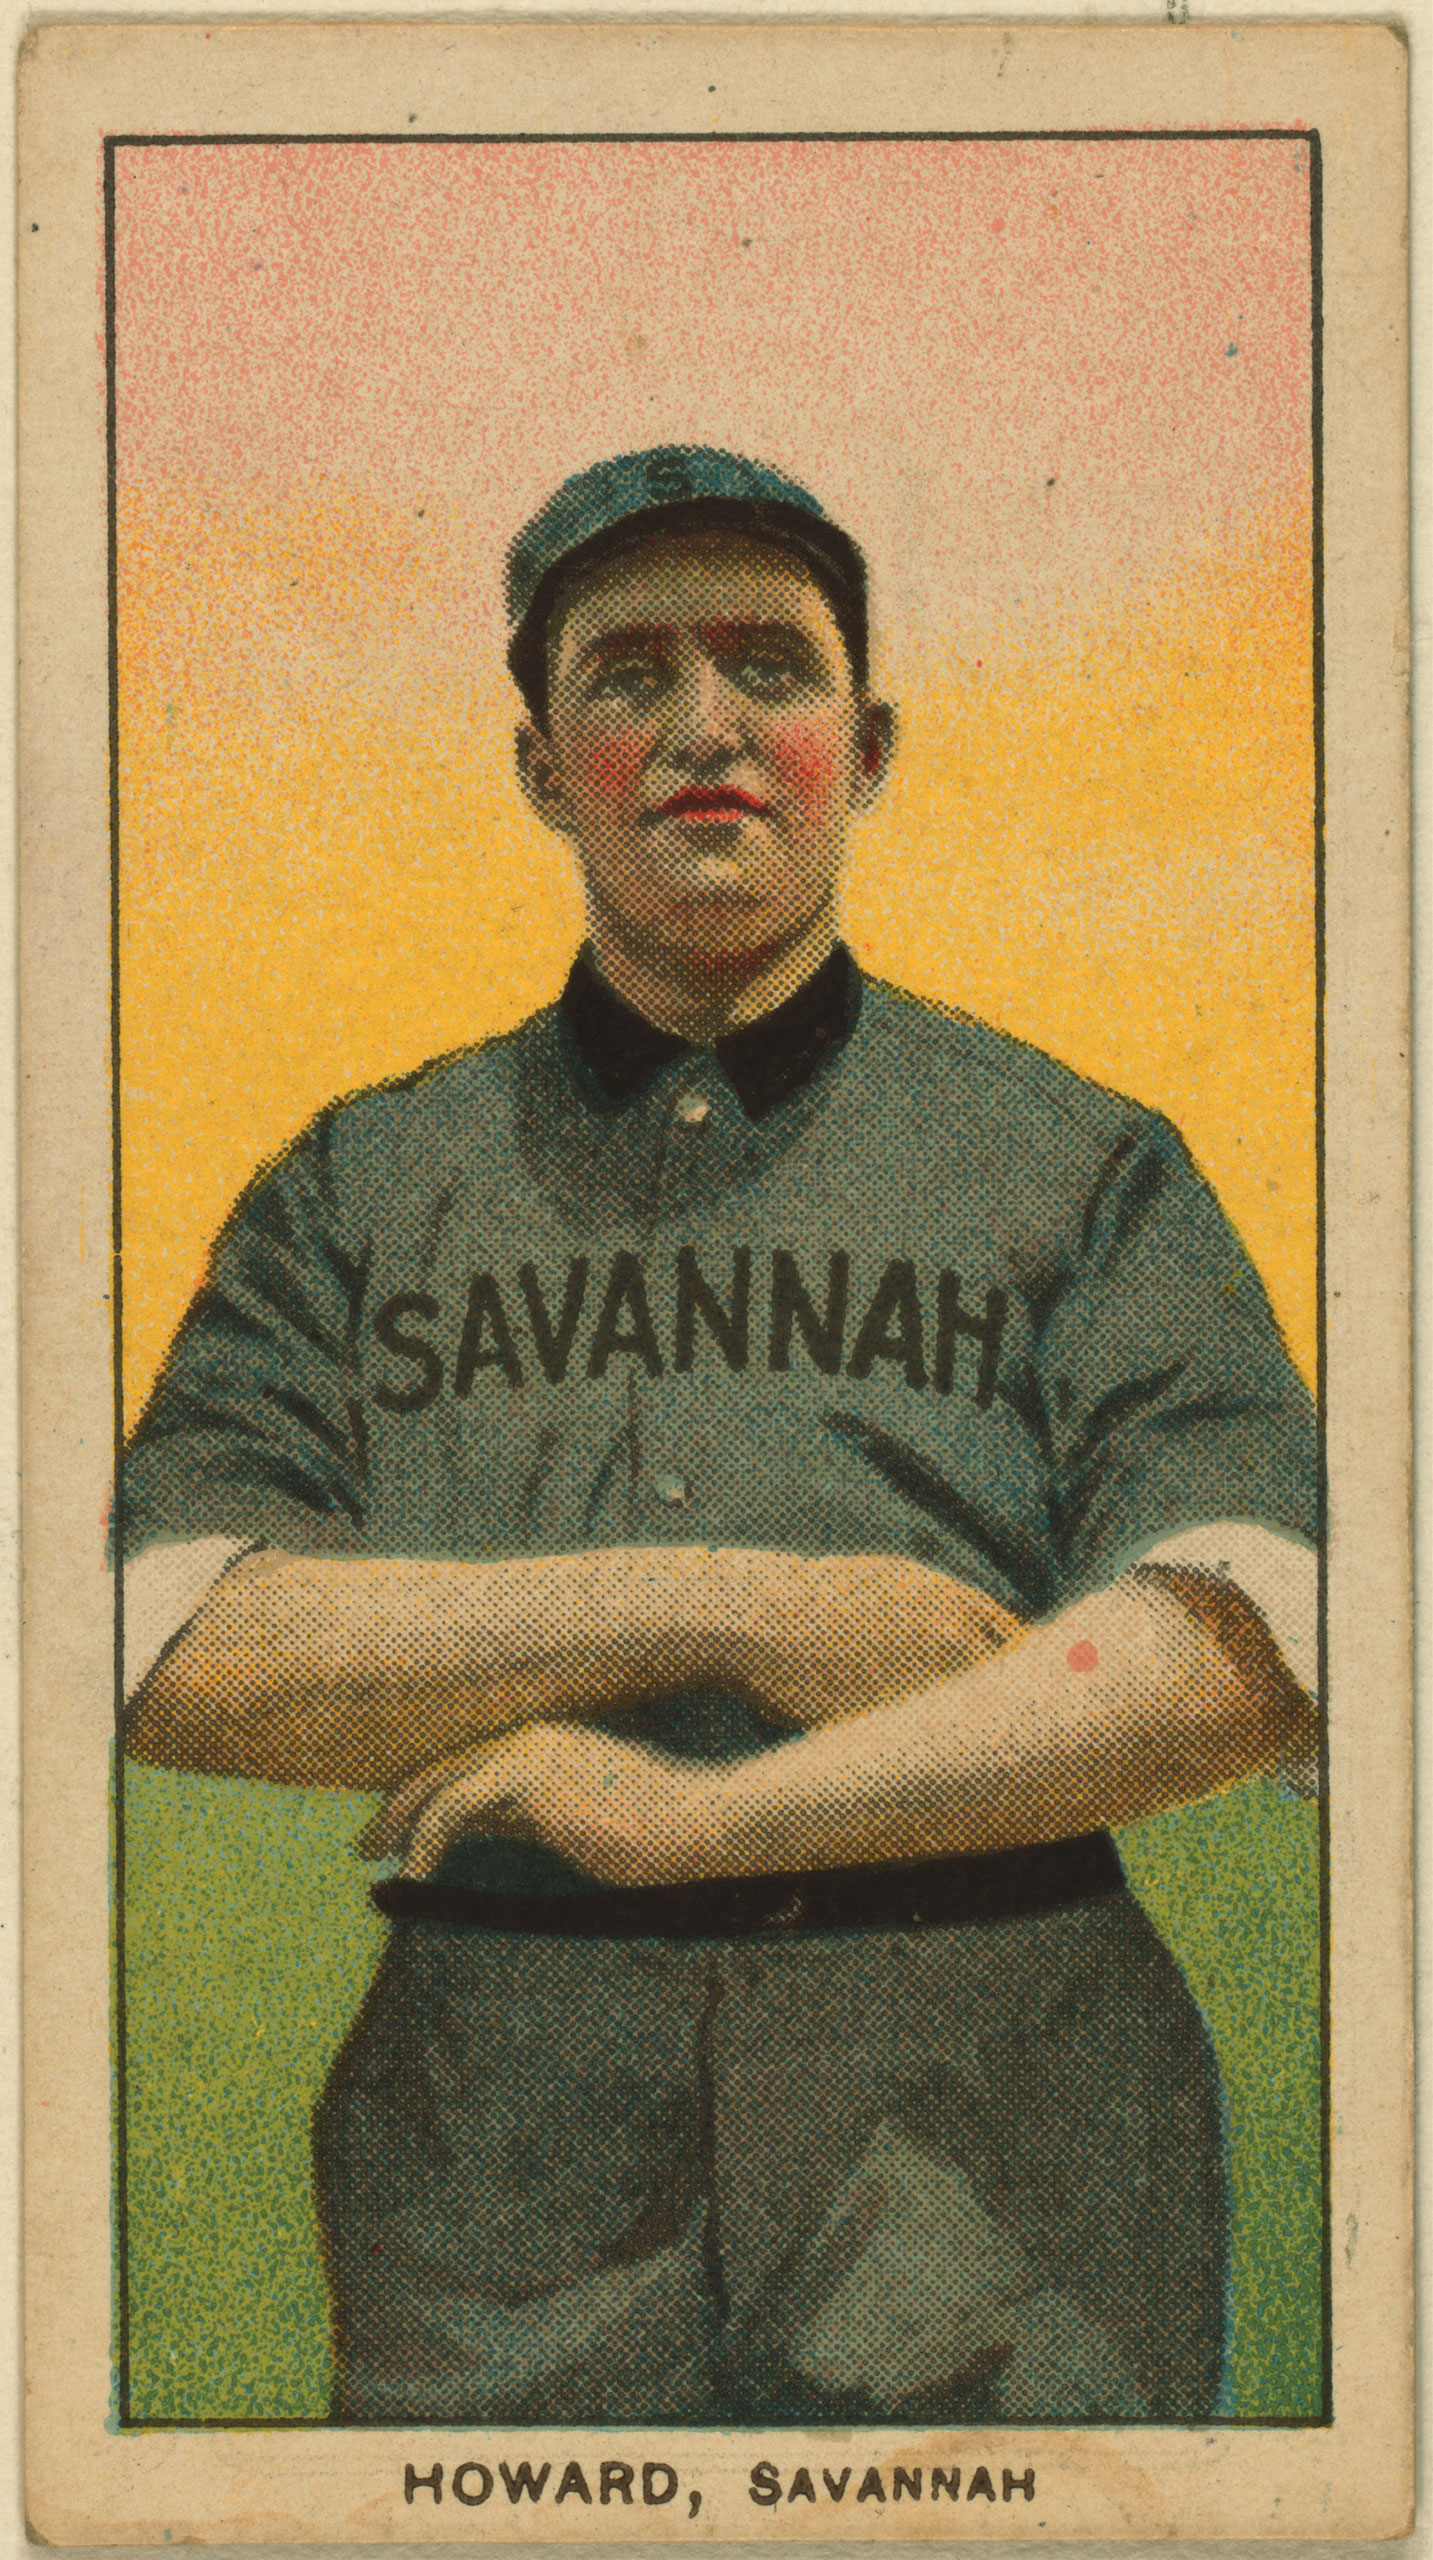 Ernie Howard, Savannah Team, baseball card, 1909-1911.